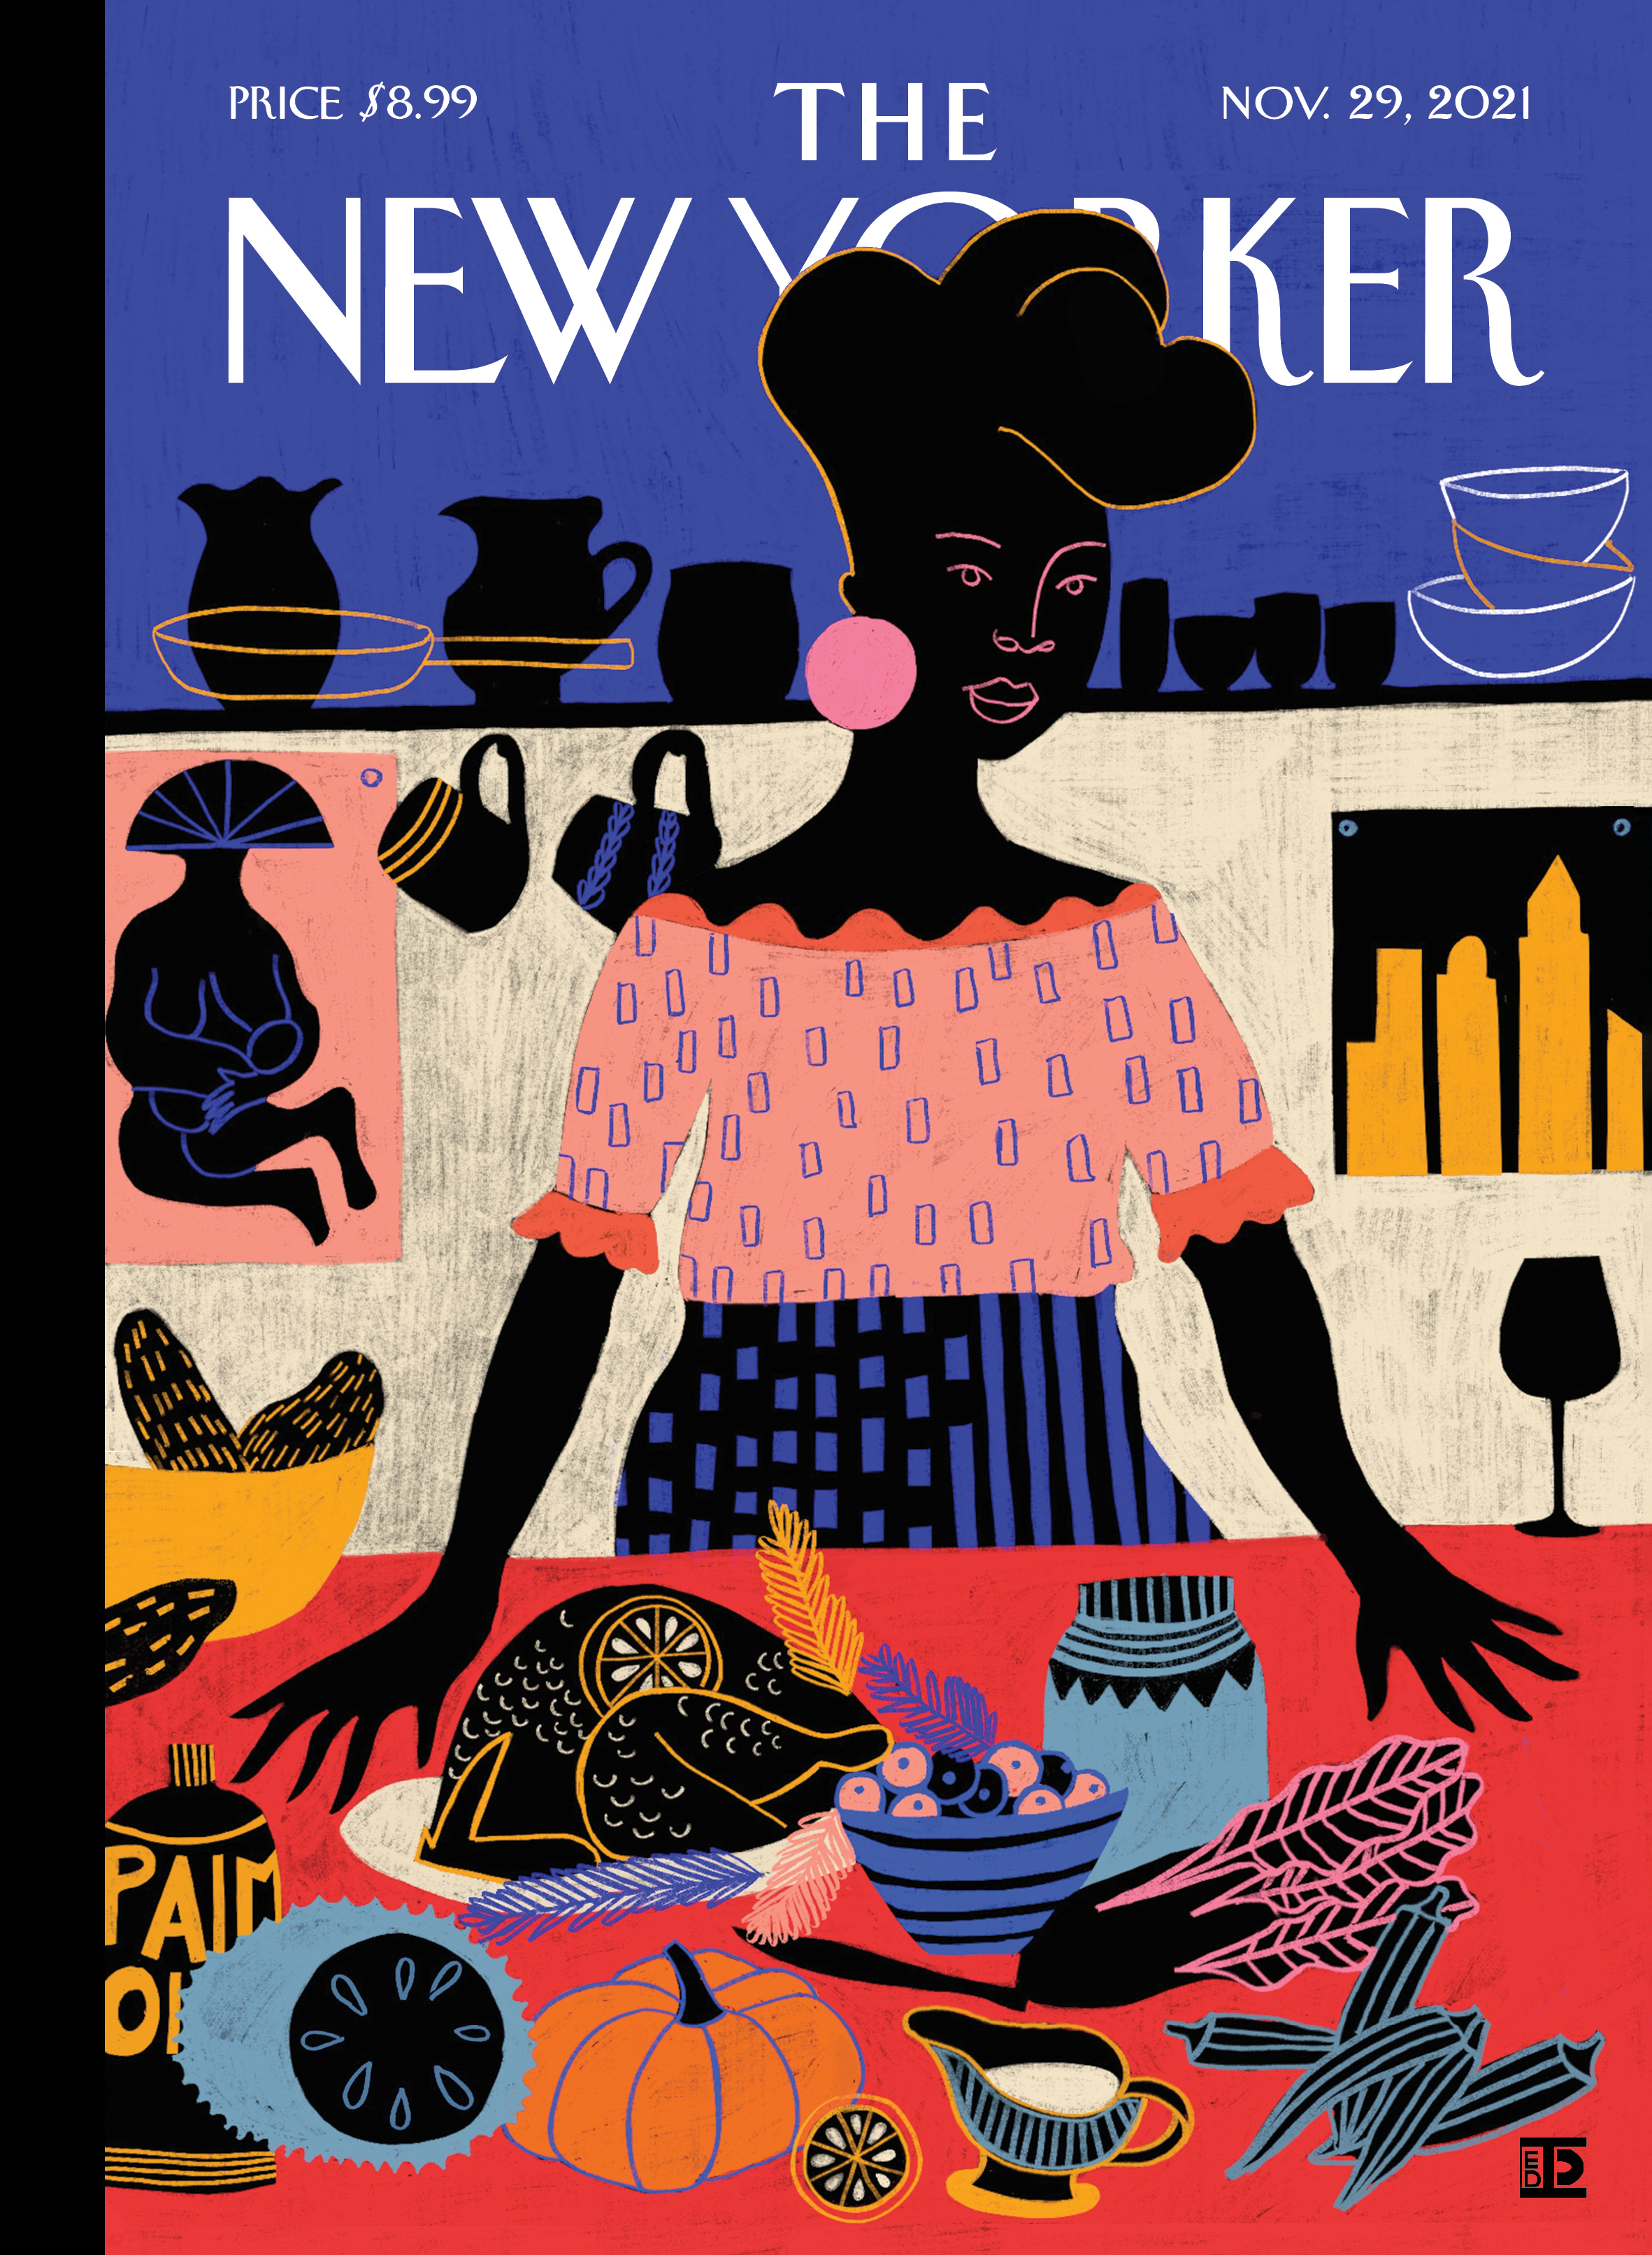 The New Yorker - "Tastes of Home," November 29, 2021